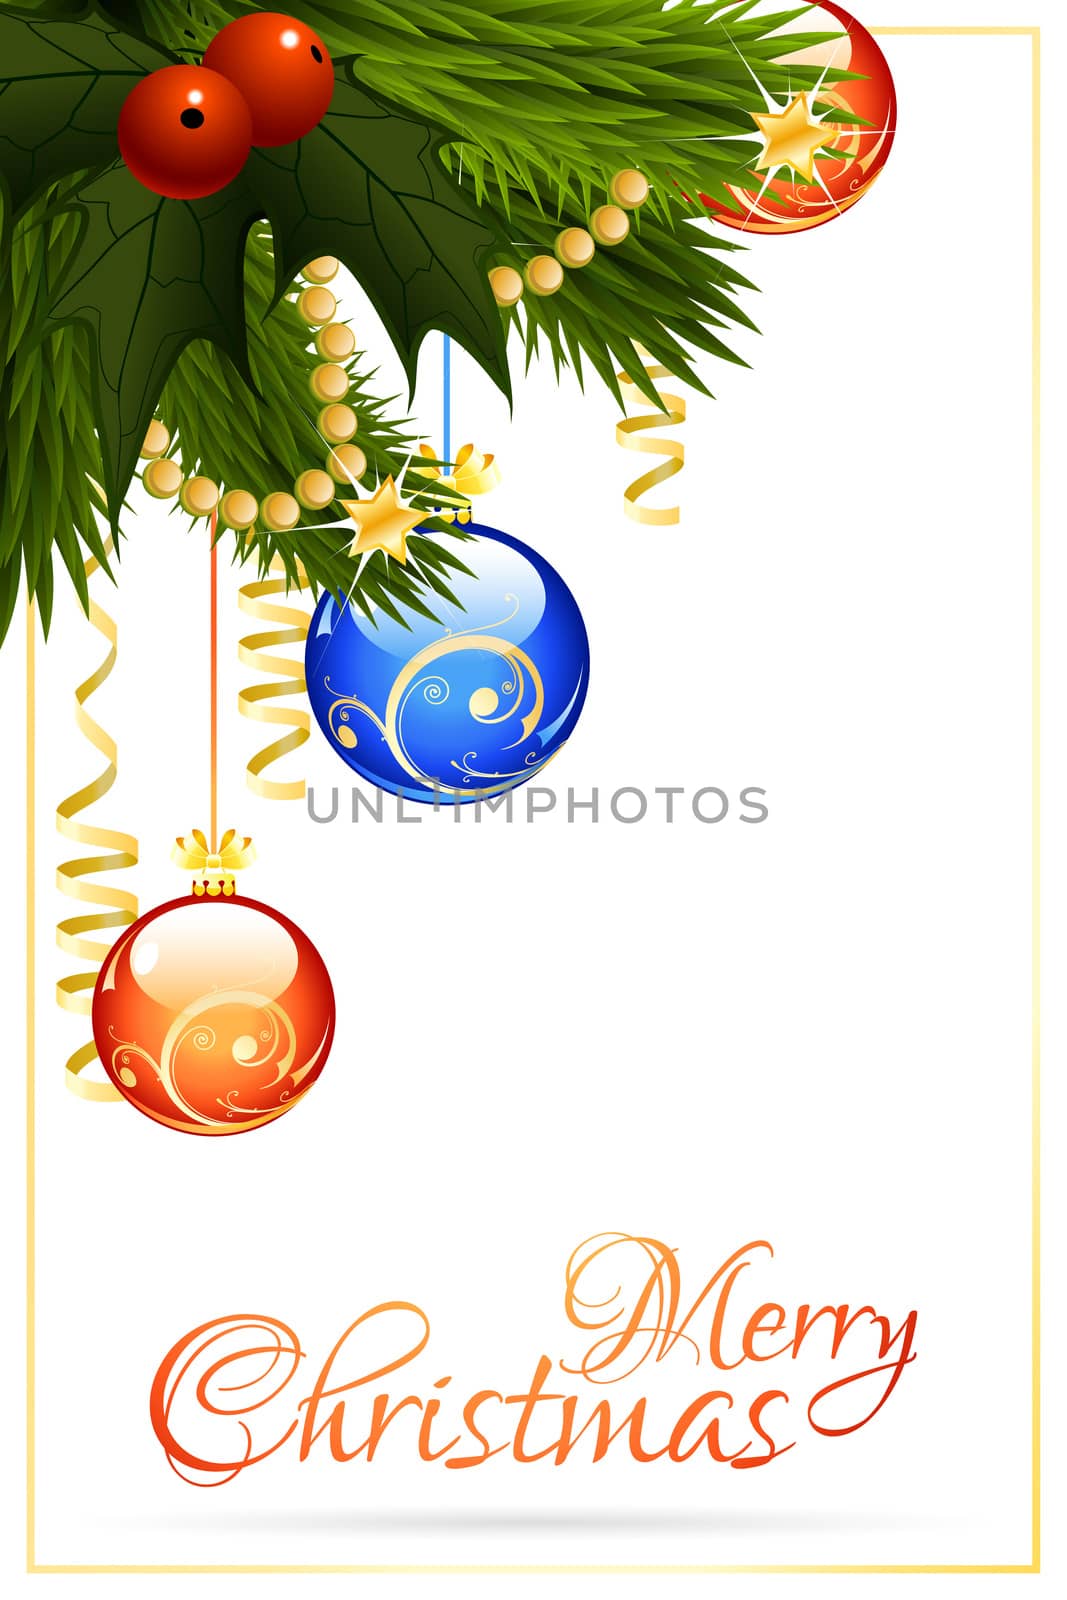 Merry Christmas Greeting Card with Mistletoe, Fir Tree and Christmas Balls